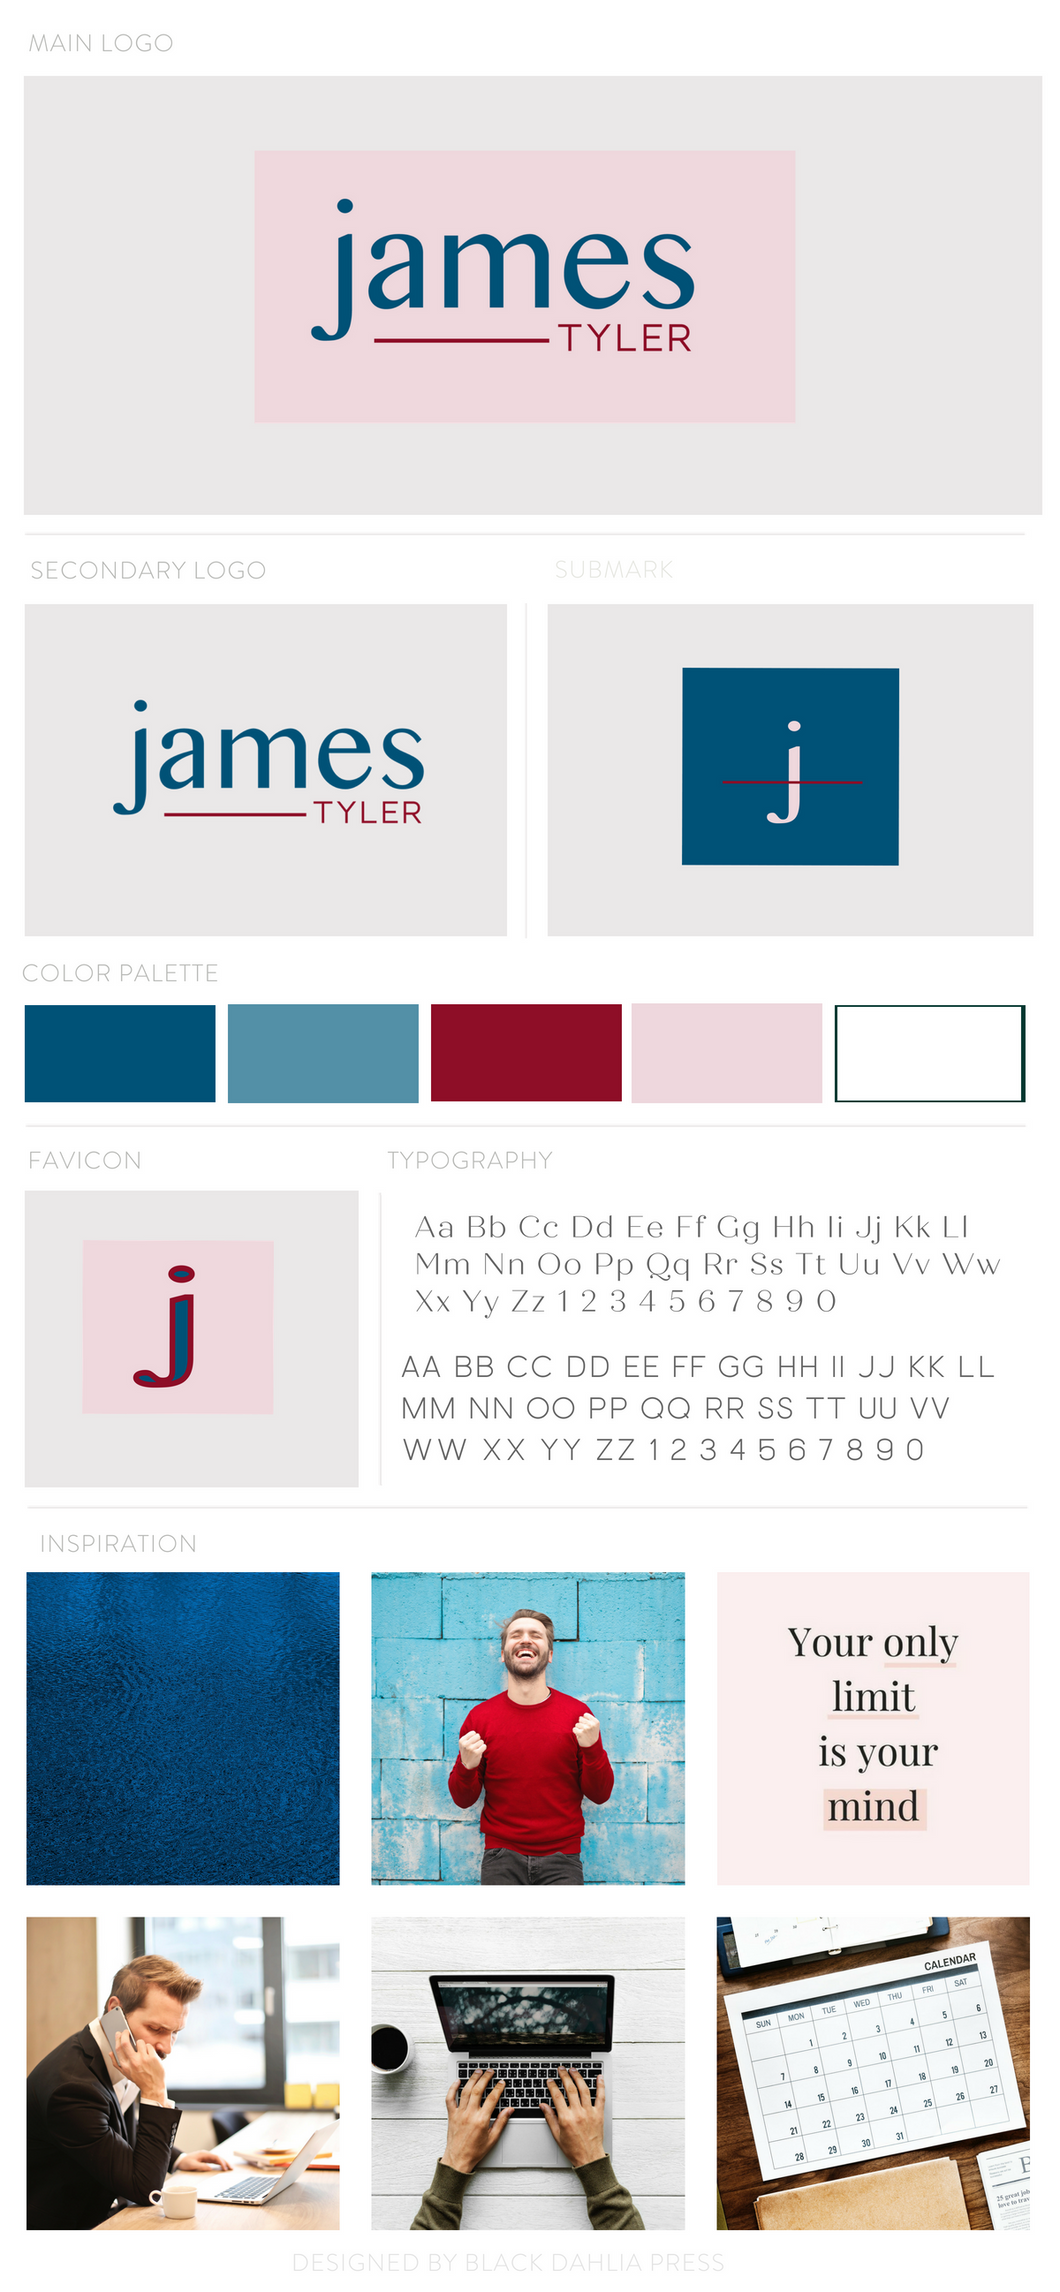 James Tyler Pre-made Brand